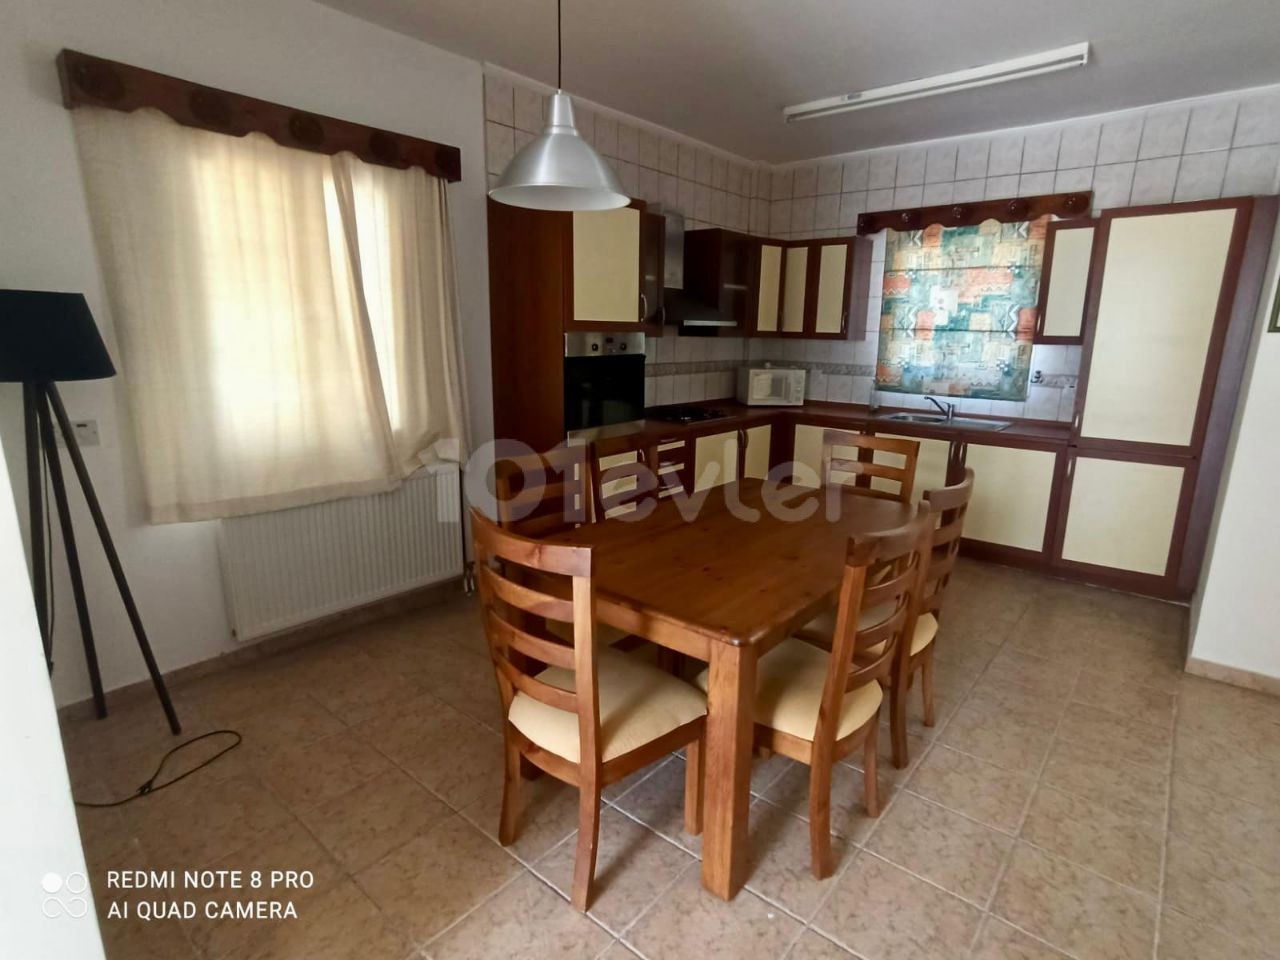 3 bedroom villa for rent in Kyrenia, Bellapais